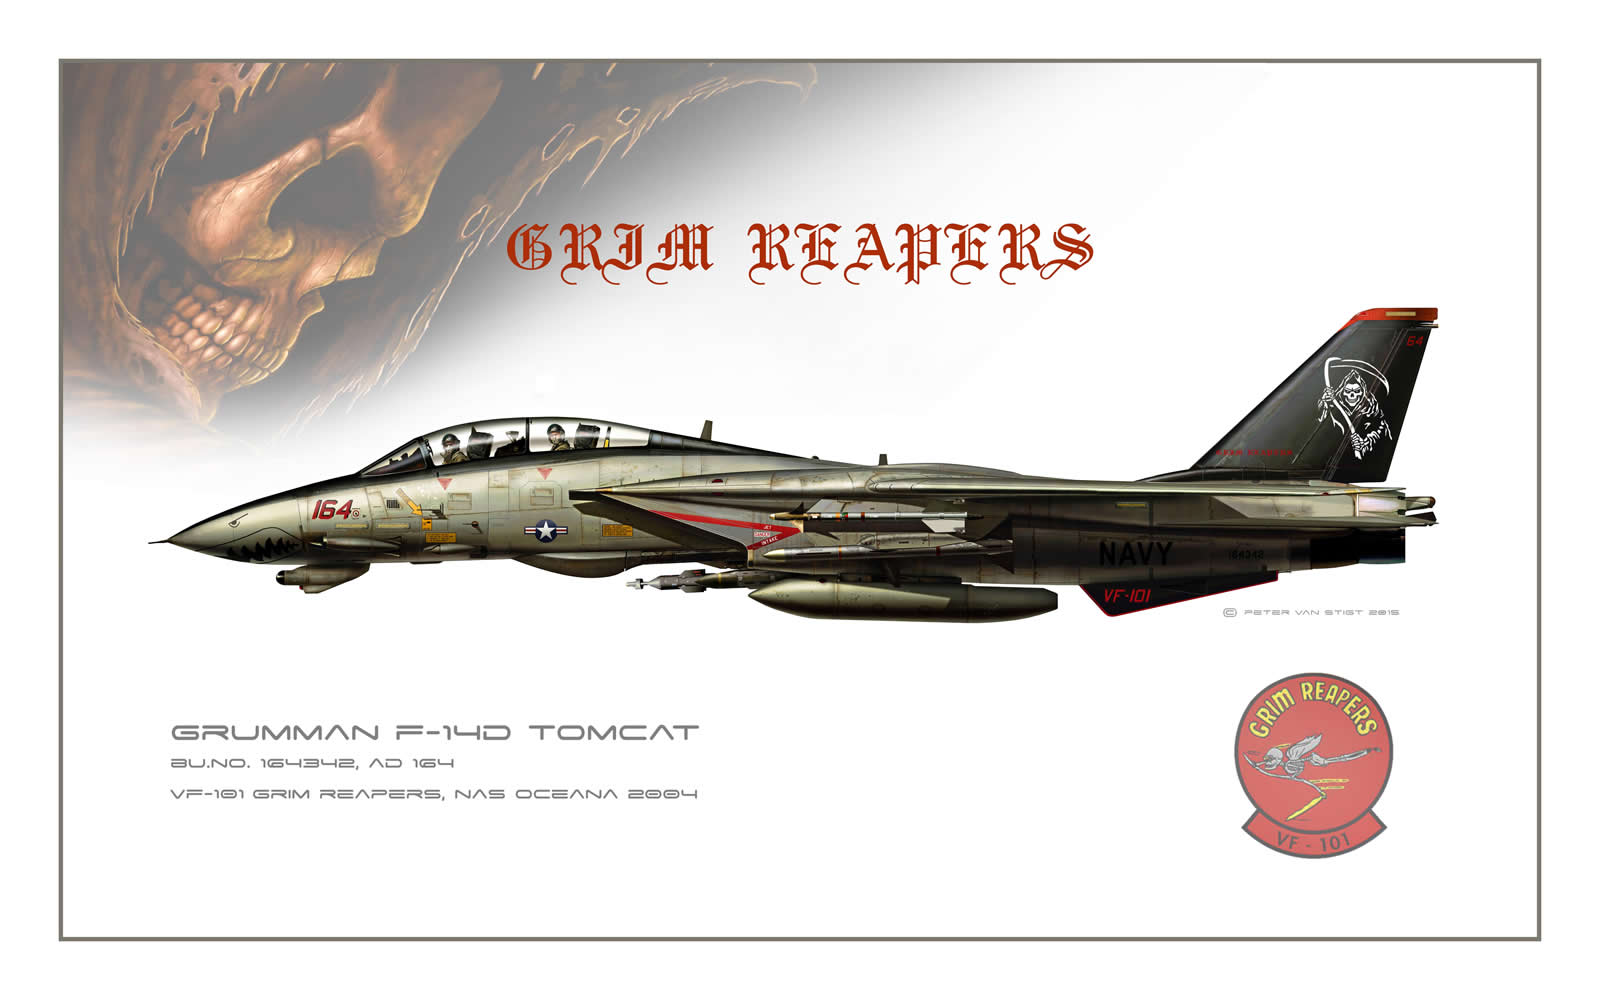 VF-101 Grim Reapers 2004 F-14 Tomcat Profile